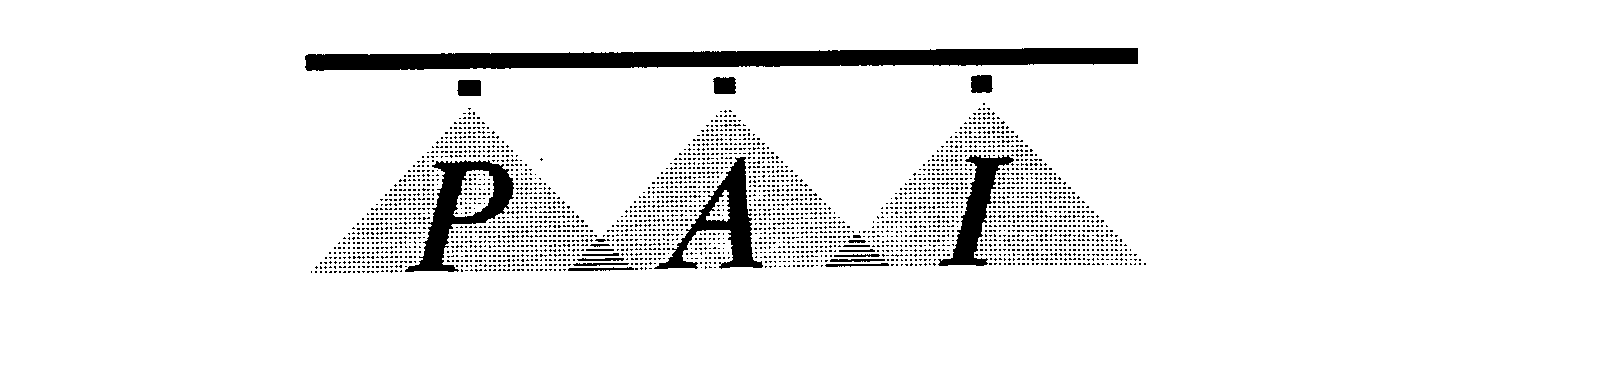 Trademark Logo PAI